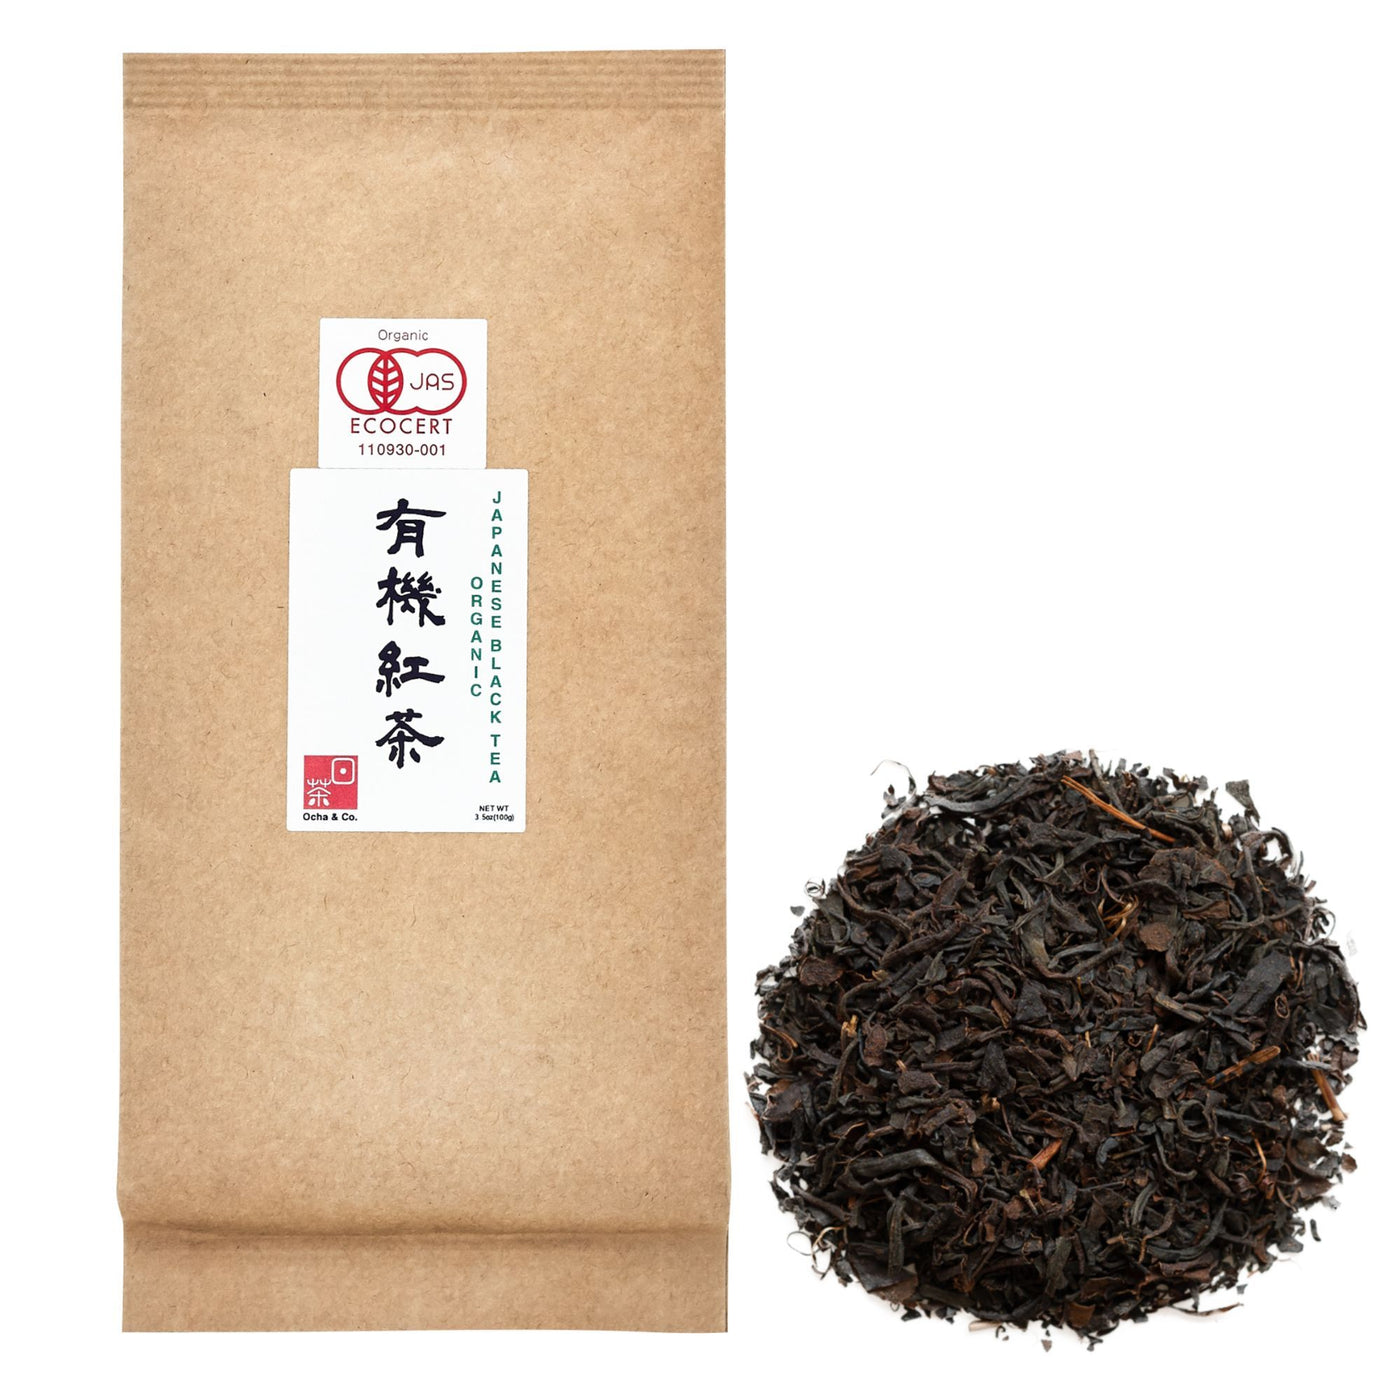 Ocha & Co. Organic Japanese Black Tea